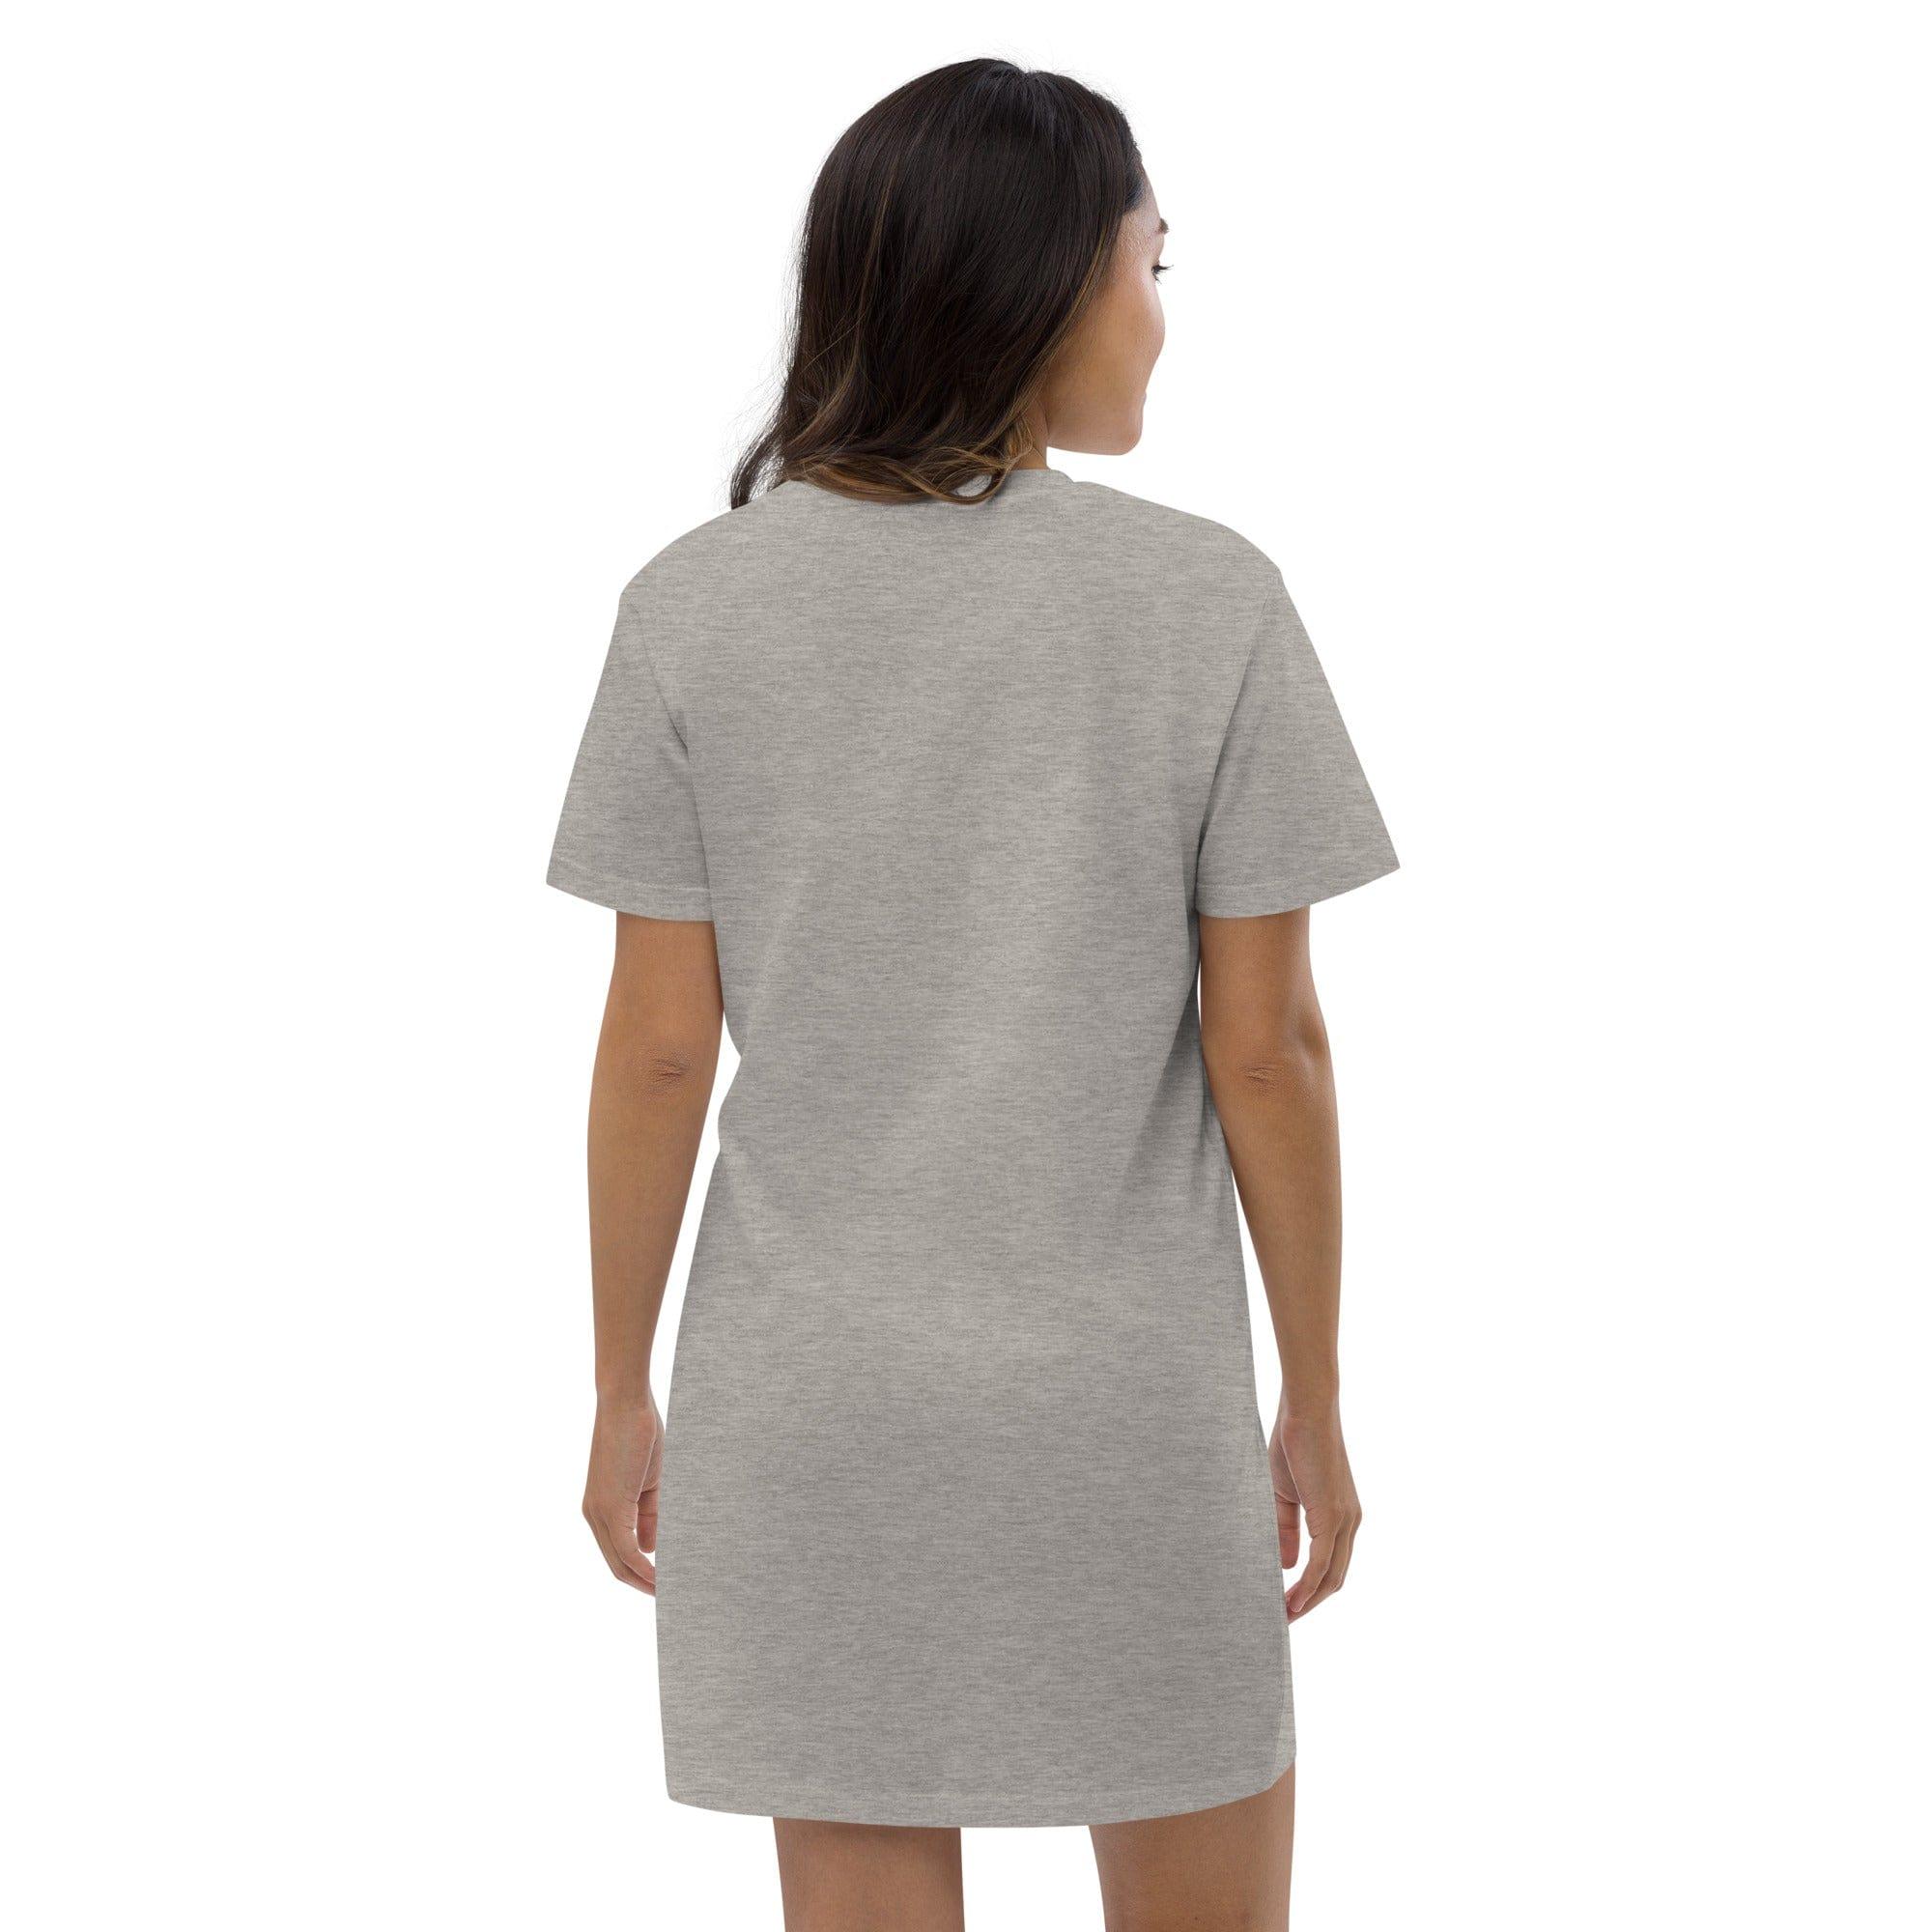 You Just Need To scream Organic Cotton T-shirt Dress - Beyond T-shirts